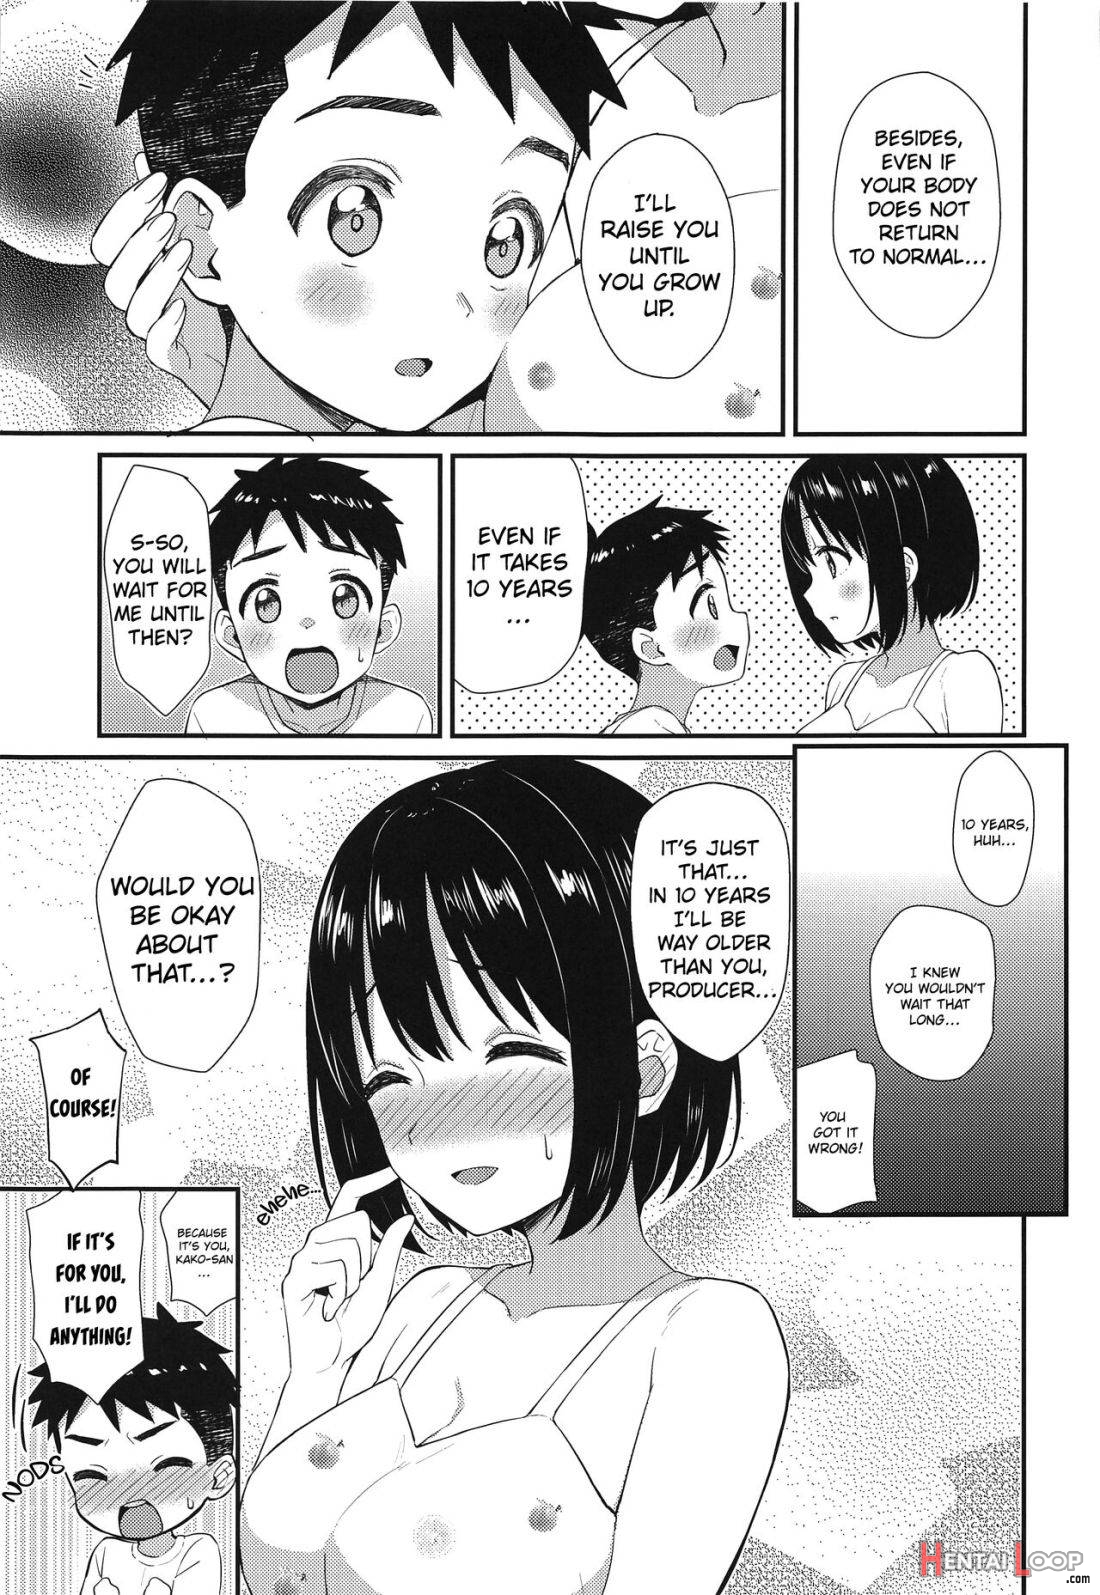 Kako-san to Shota P page 22